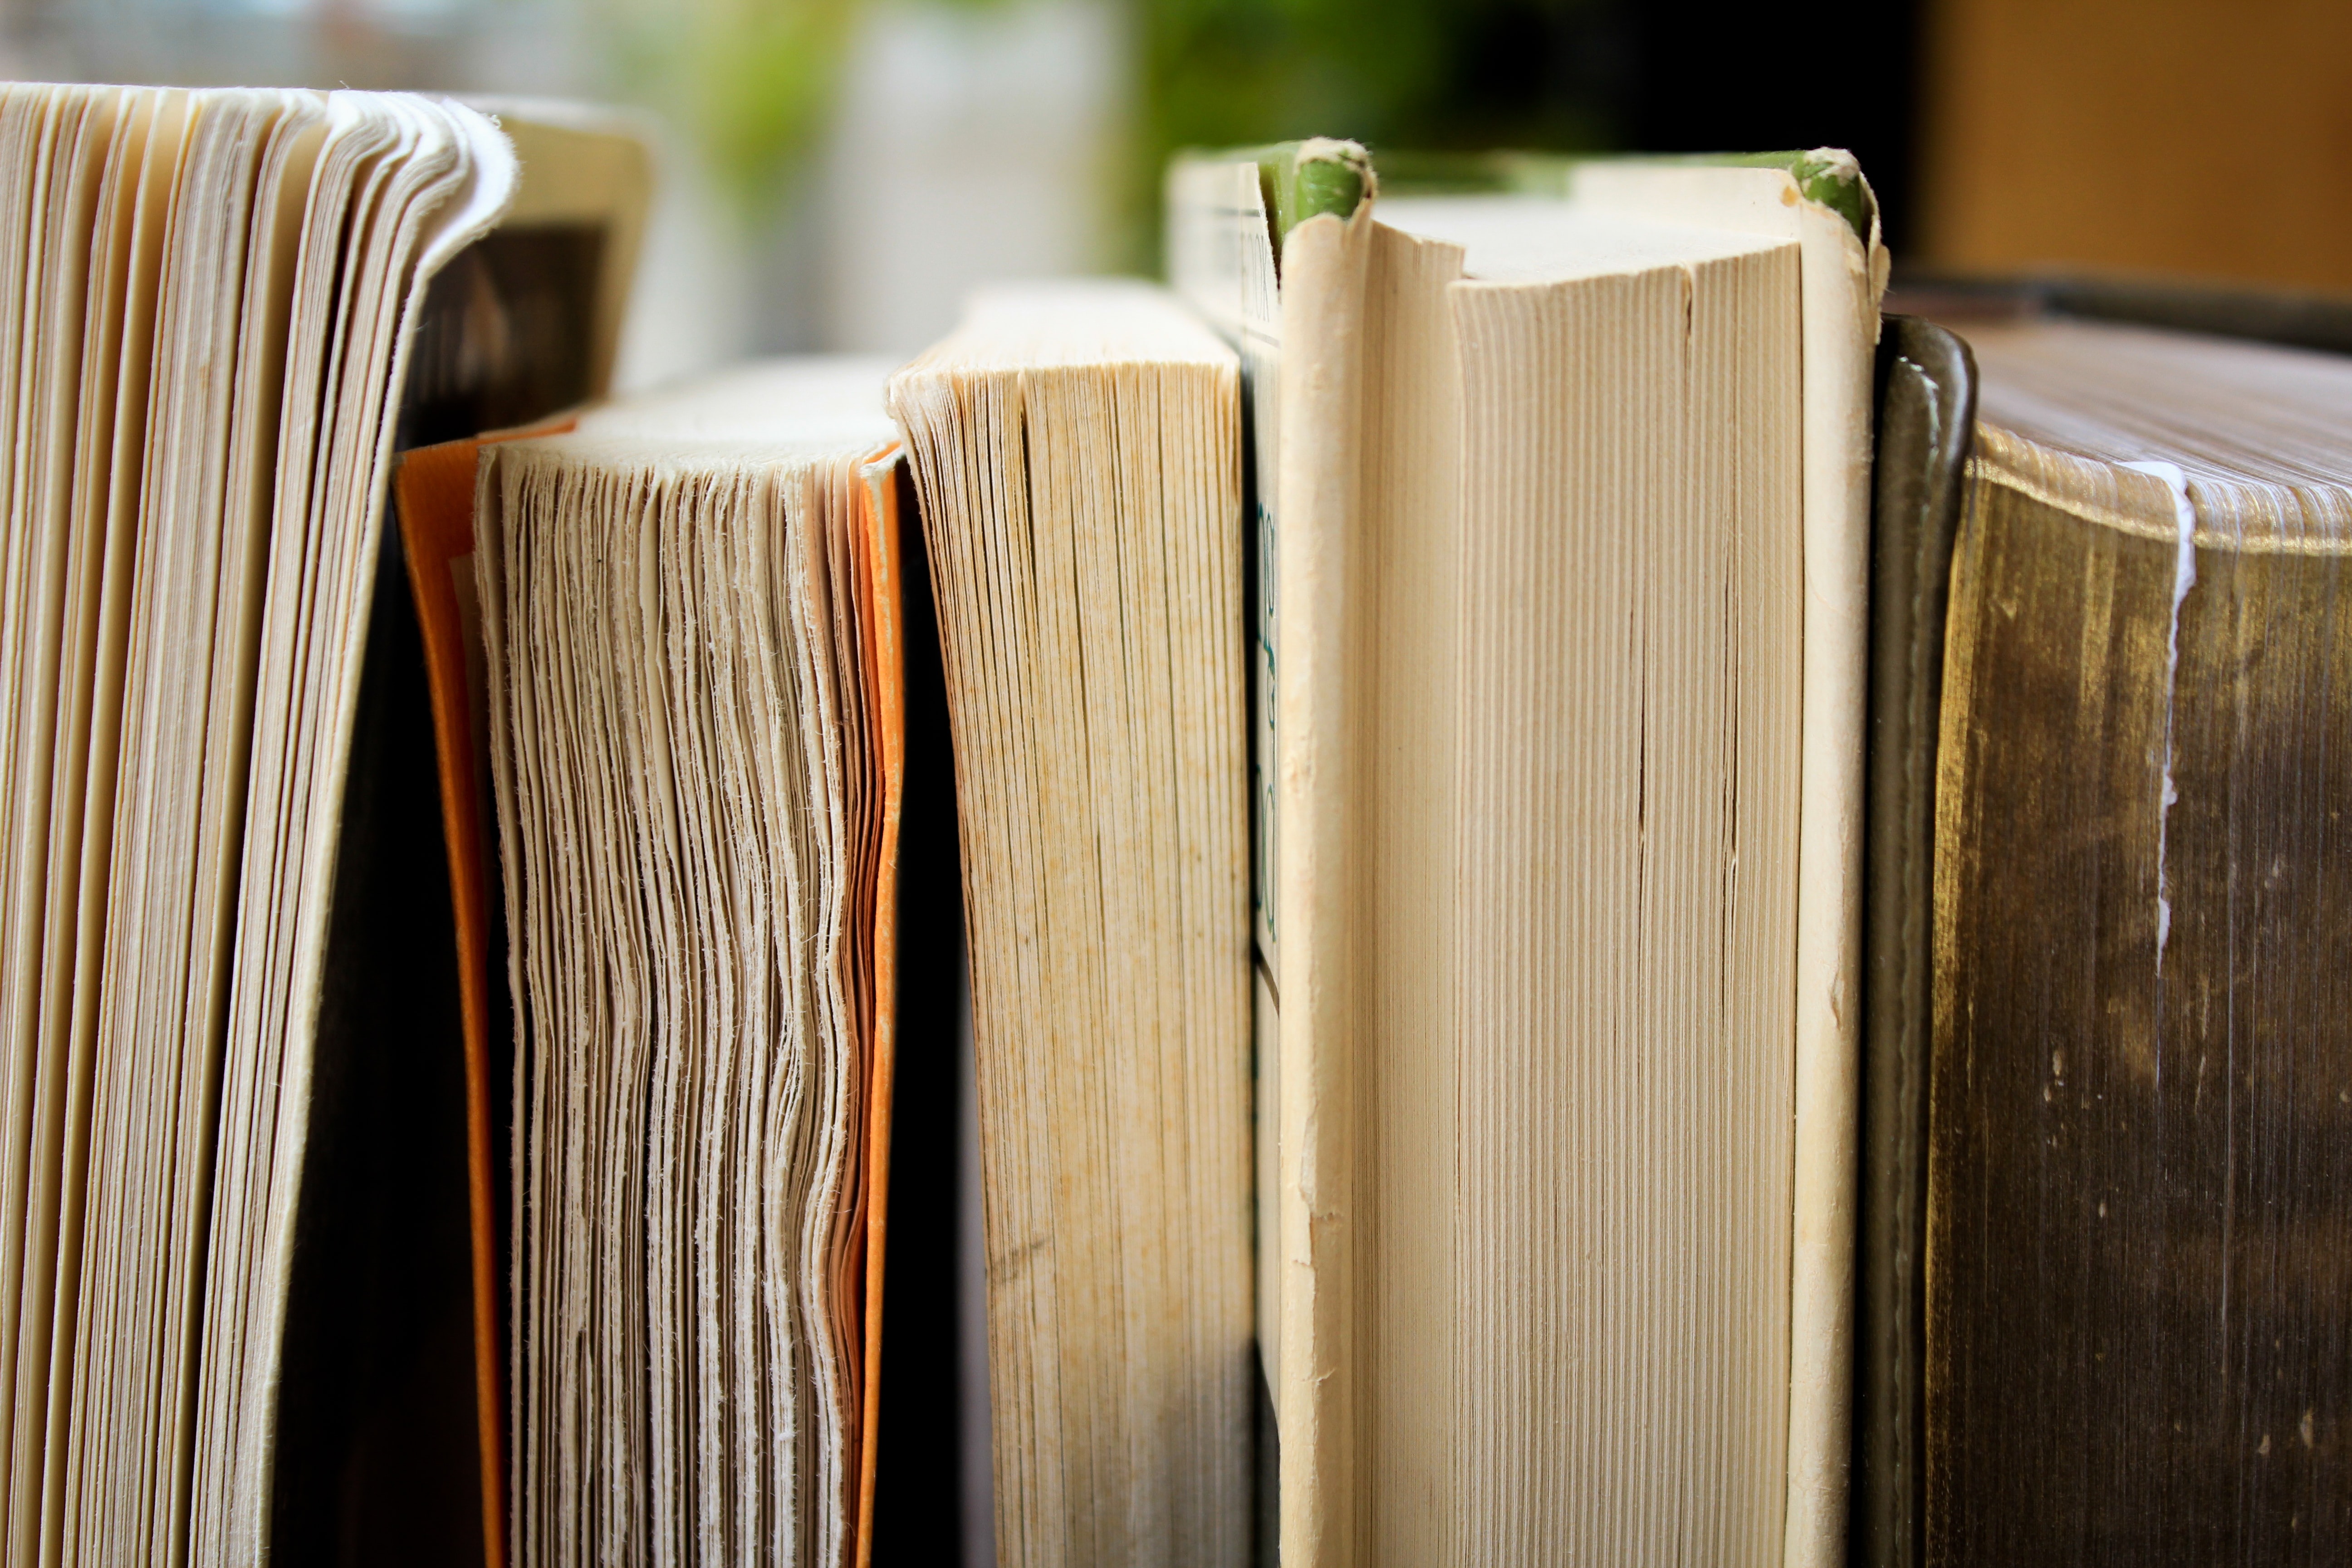 Close-up image of books